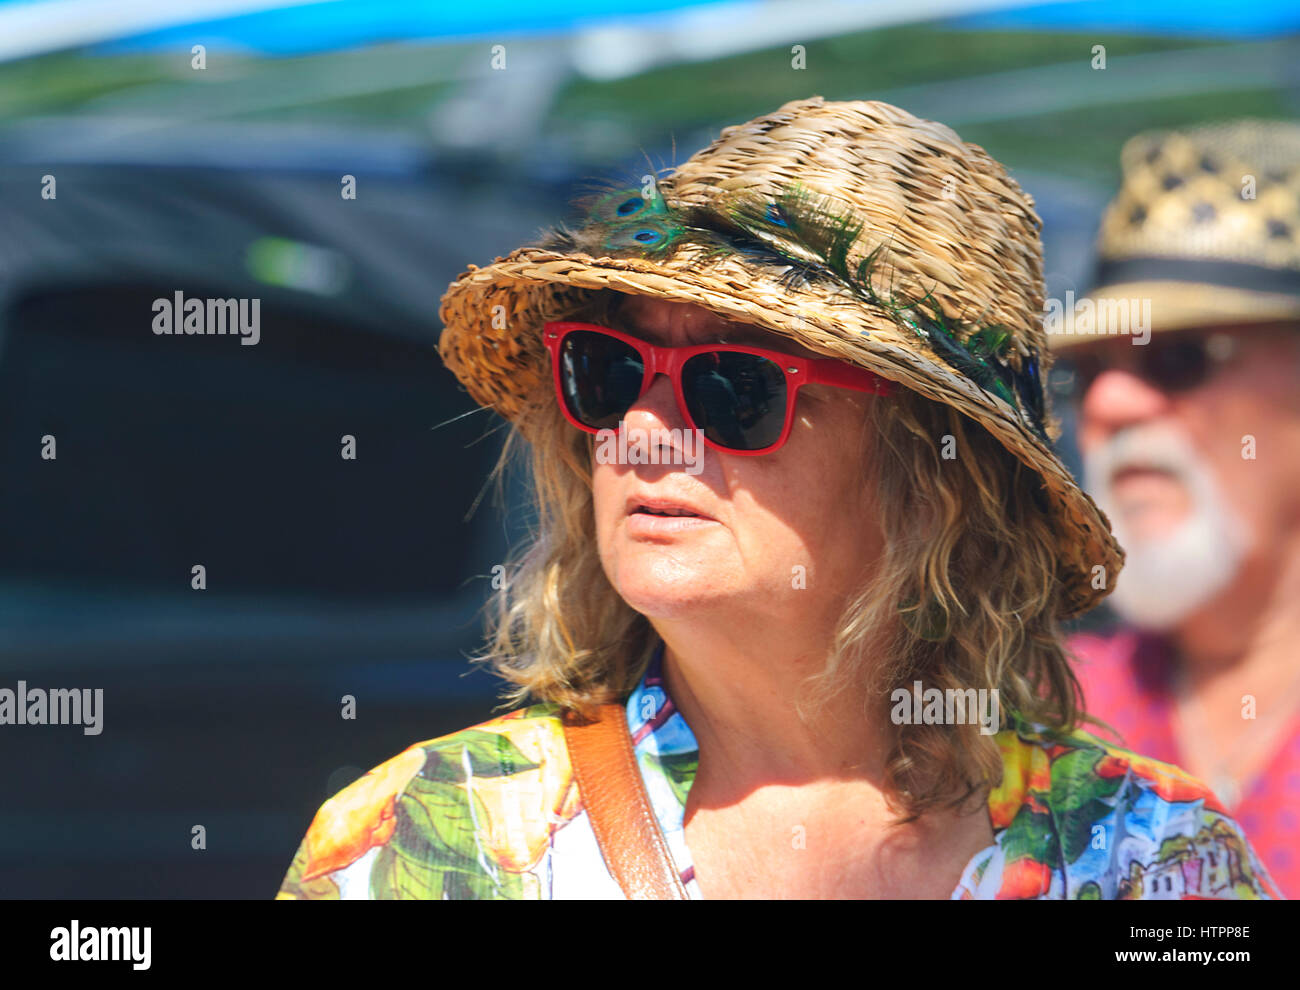 Female spectator wearing a straw hat and red sunglasses at Kiama Jazz & Blues Festival 2017, Illawarra Coast, New South Wales, NSW, Australia Stock Photo